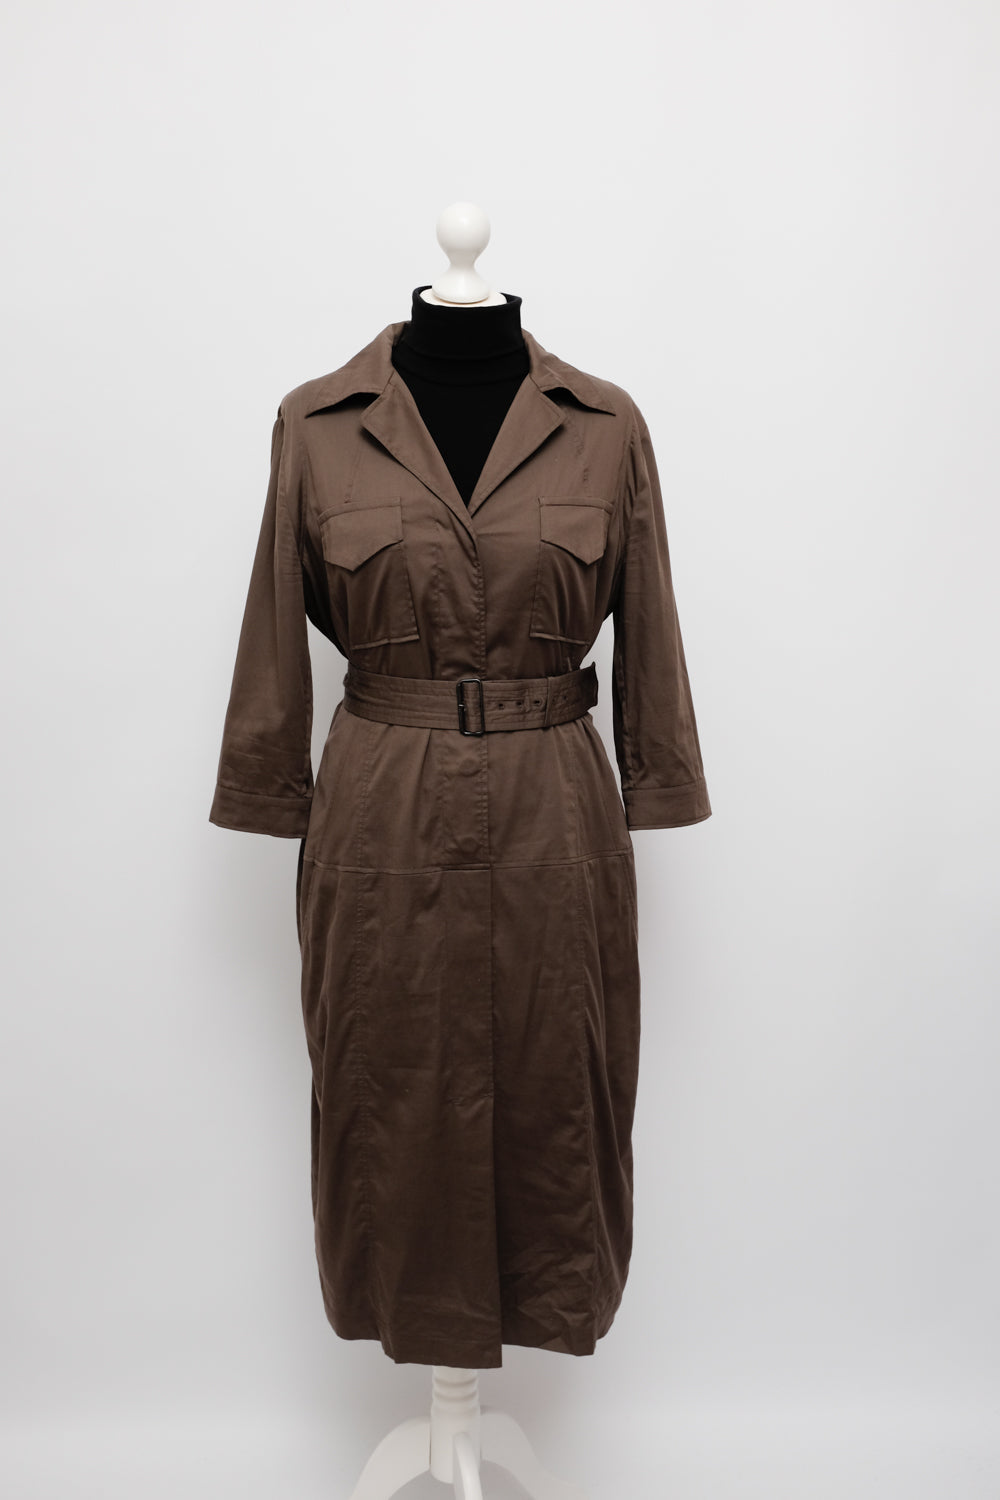 RENE LEZARD COTTON BROWN LONG SHIRT DRESS